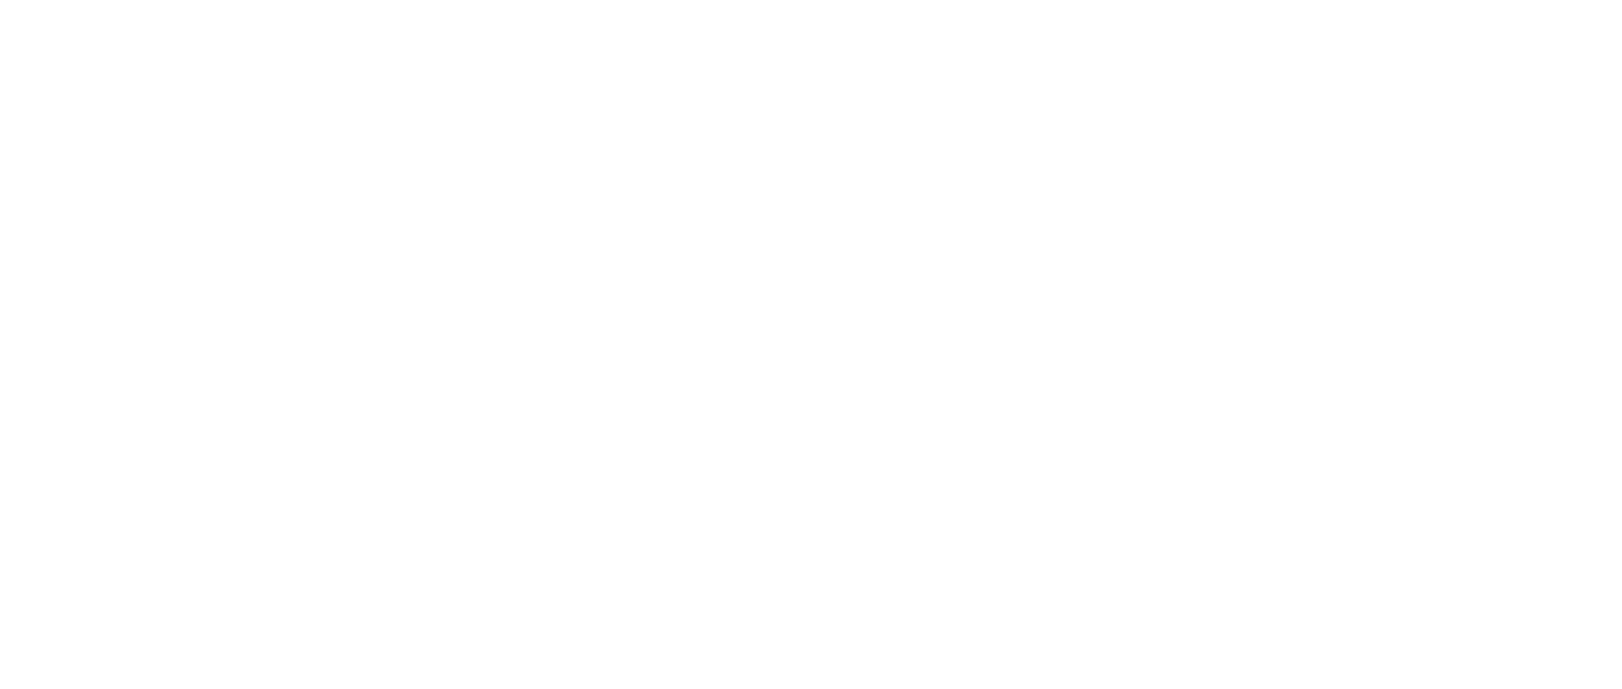 EVgo Logo für dunkle Hintergründe (transparentes PNG)